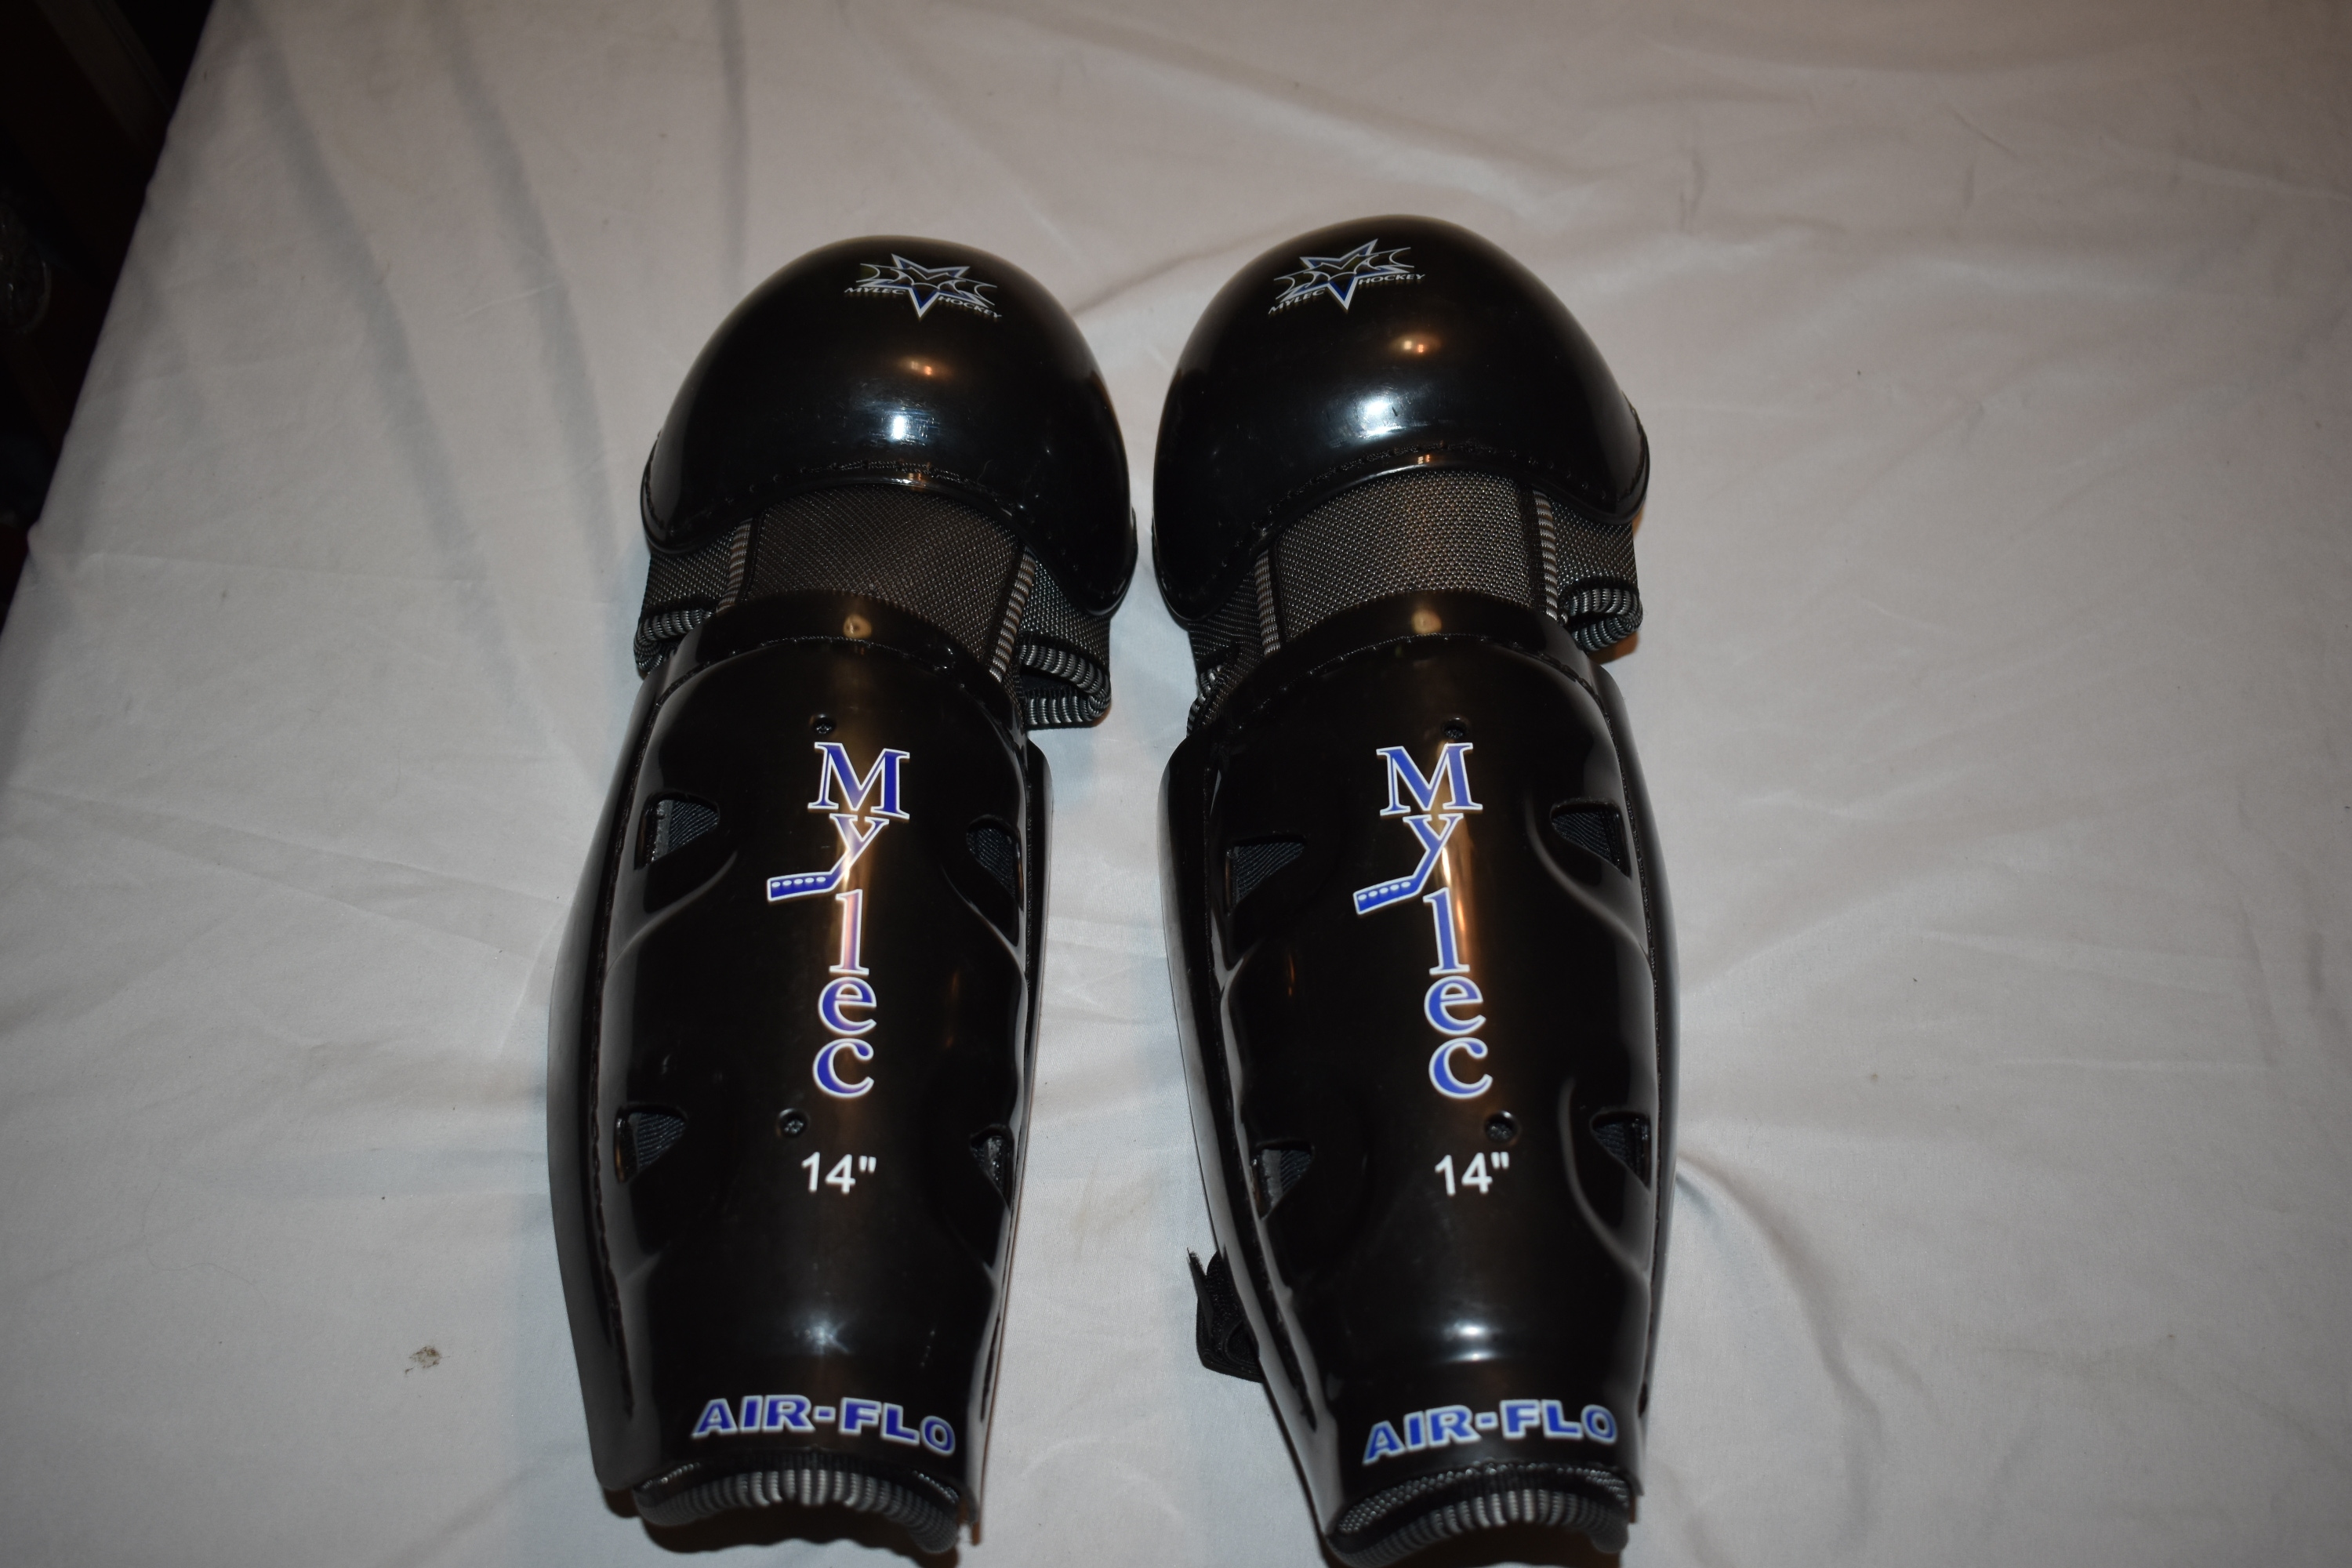 Mylec MK3 Air-Flo Hockey Shin Pads, Black, 14 Inches - Great Condition!